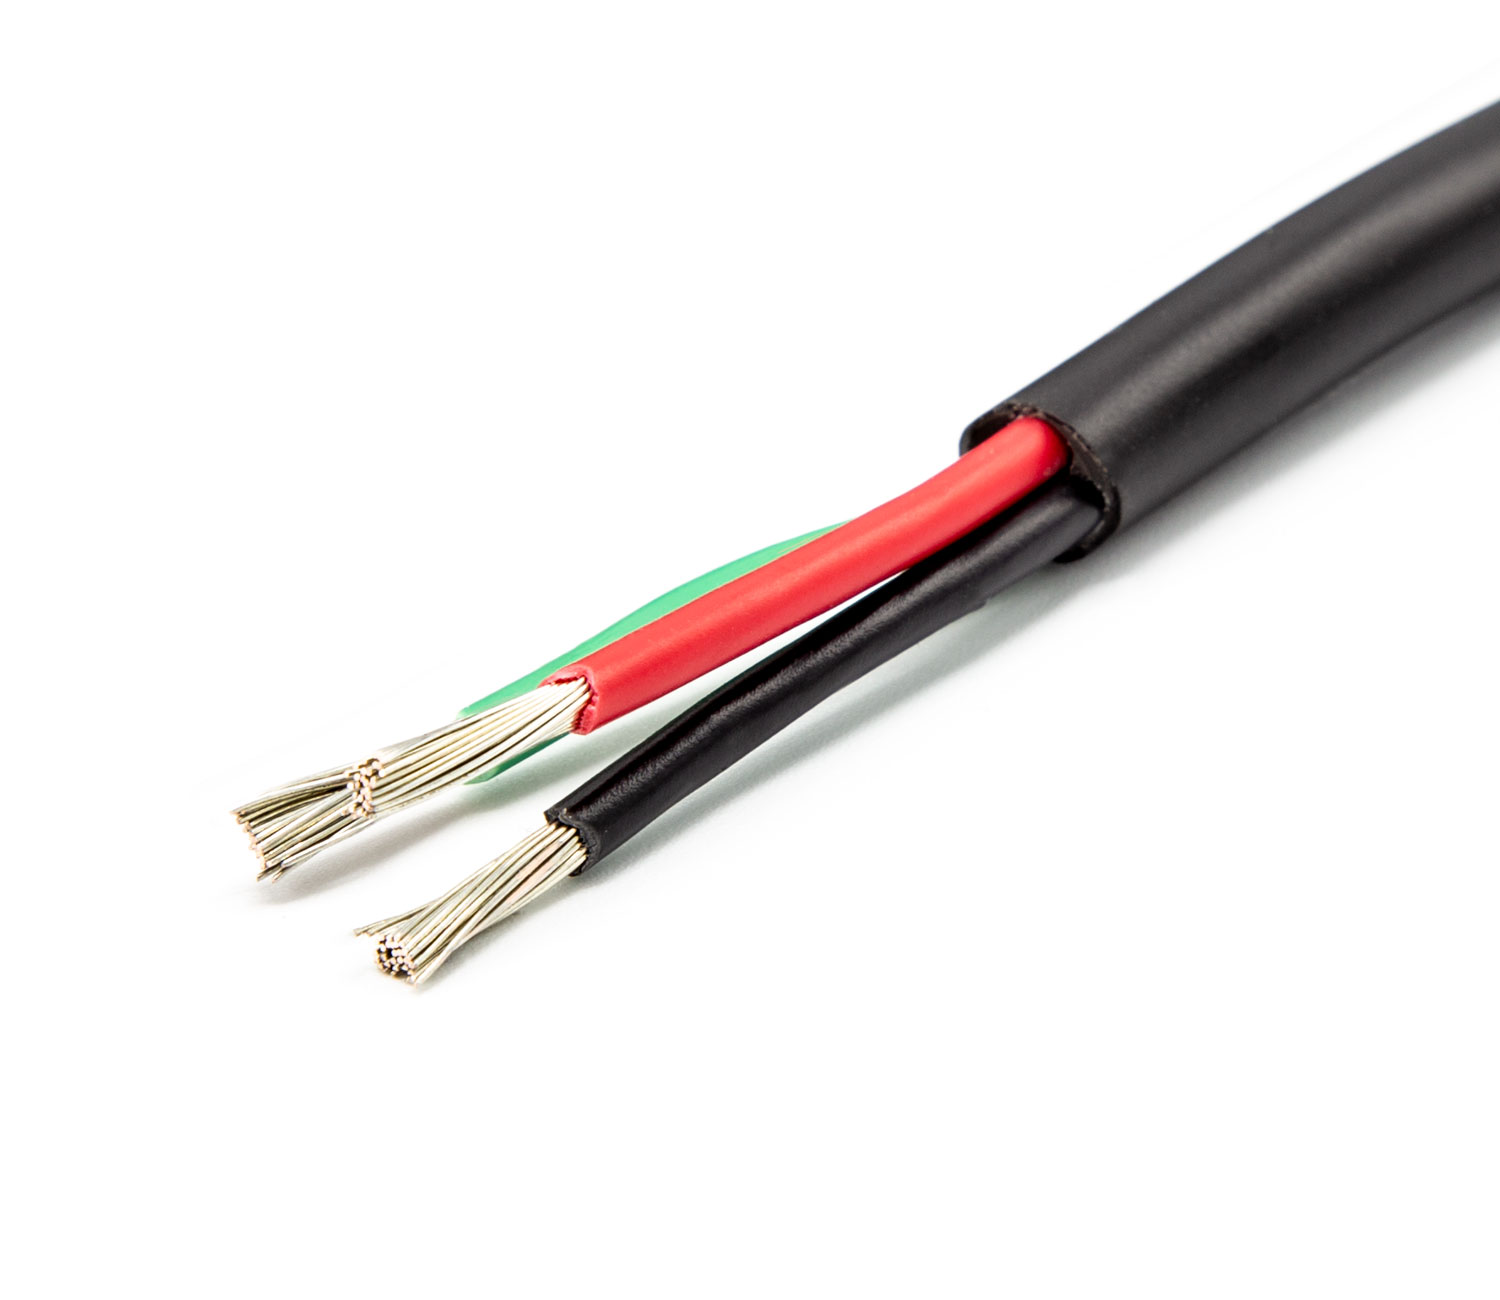  OCEANFLEX - Fortinnet elektrisk kabel multileder 5x1,5mm2 rund, 30m - Udsalg